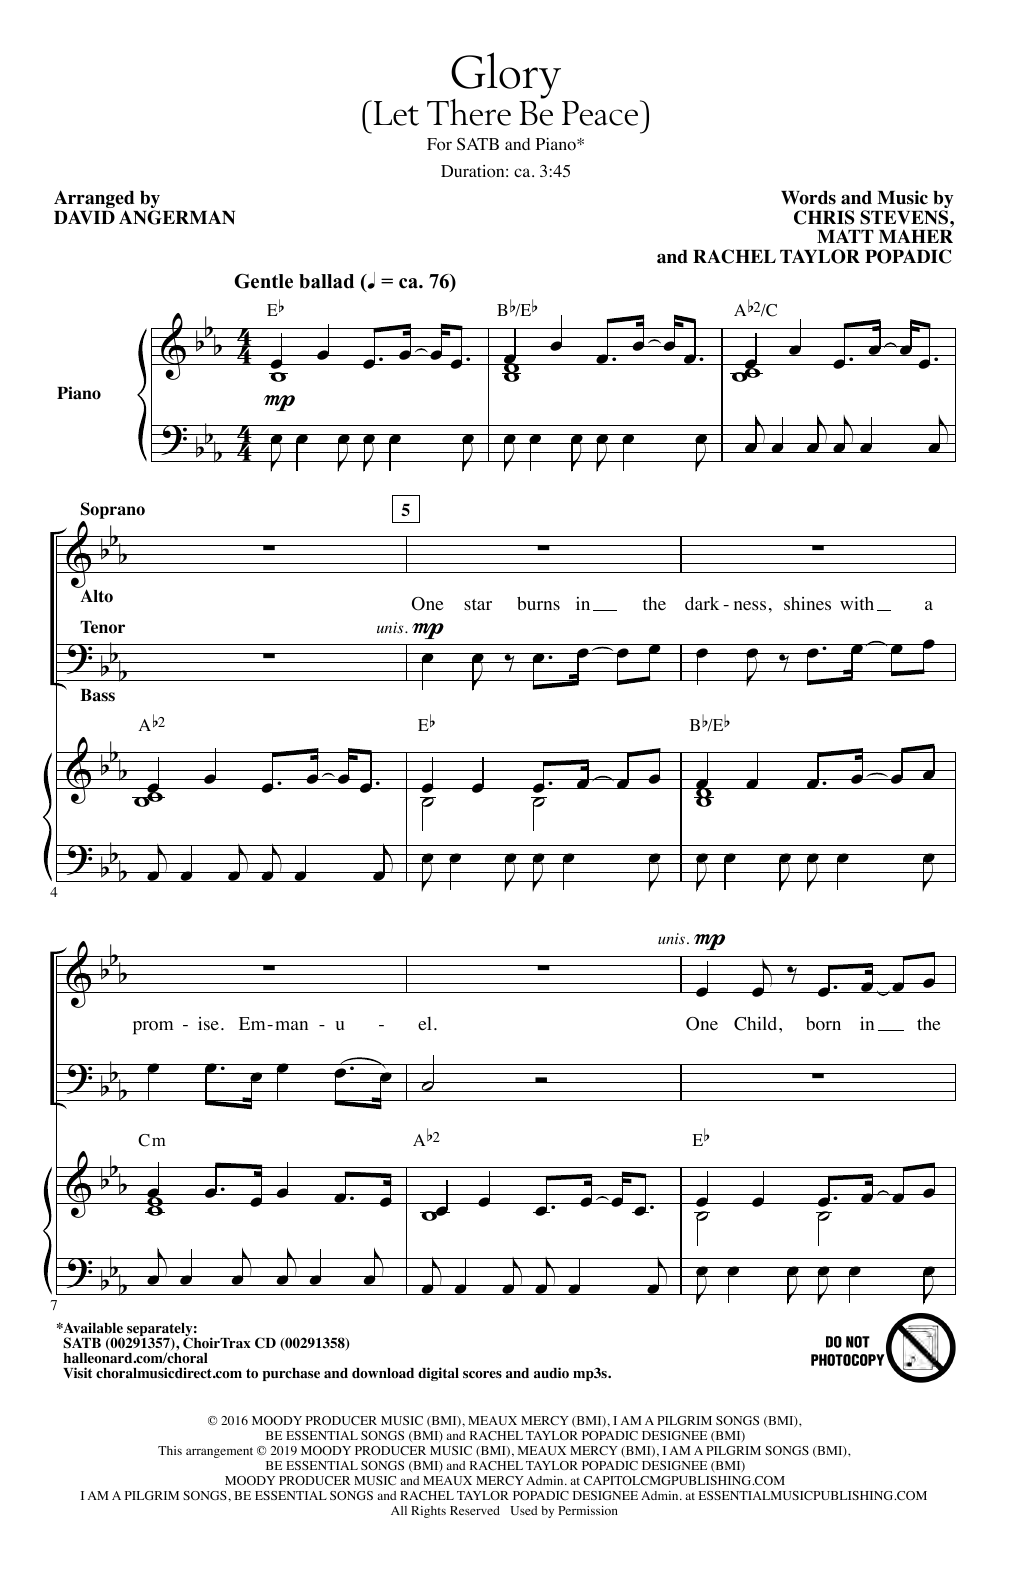 Chris Stevens, Matt Maher & Rachel Popadic Glory (Let There Be Peace) (arr. David Angerman) sheet music notes and chords arranged for SATB Choir